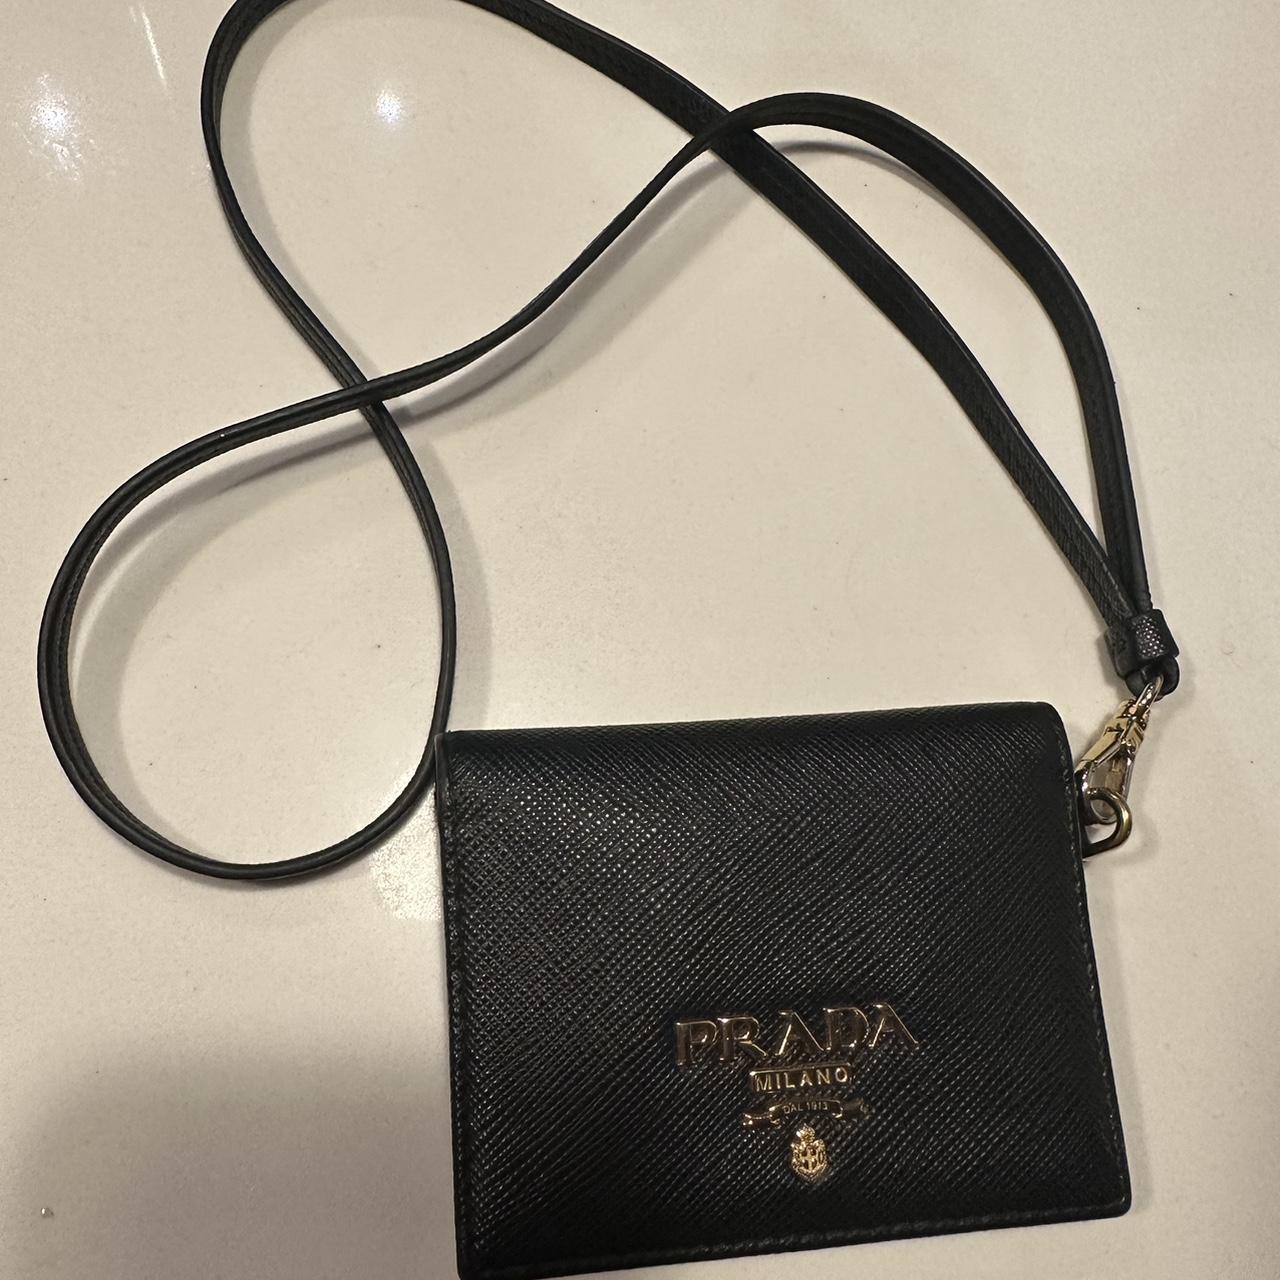 Orange Prada Saffiano leather Wallet with Strap - - Depop